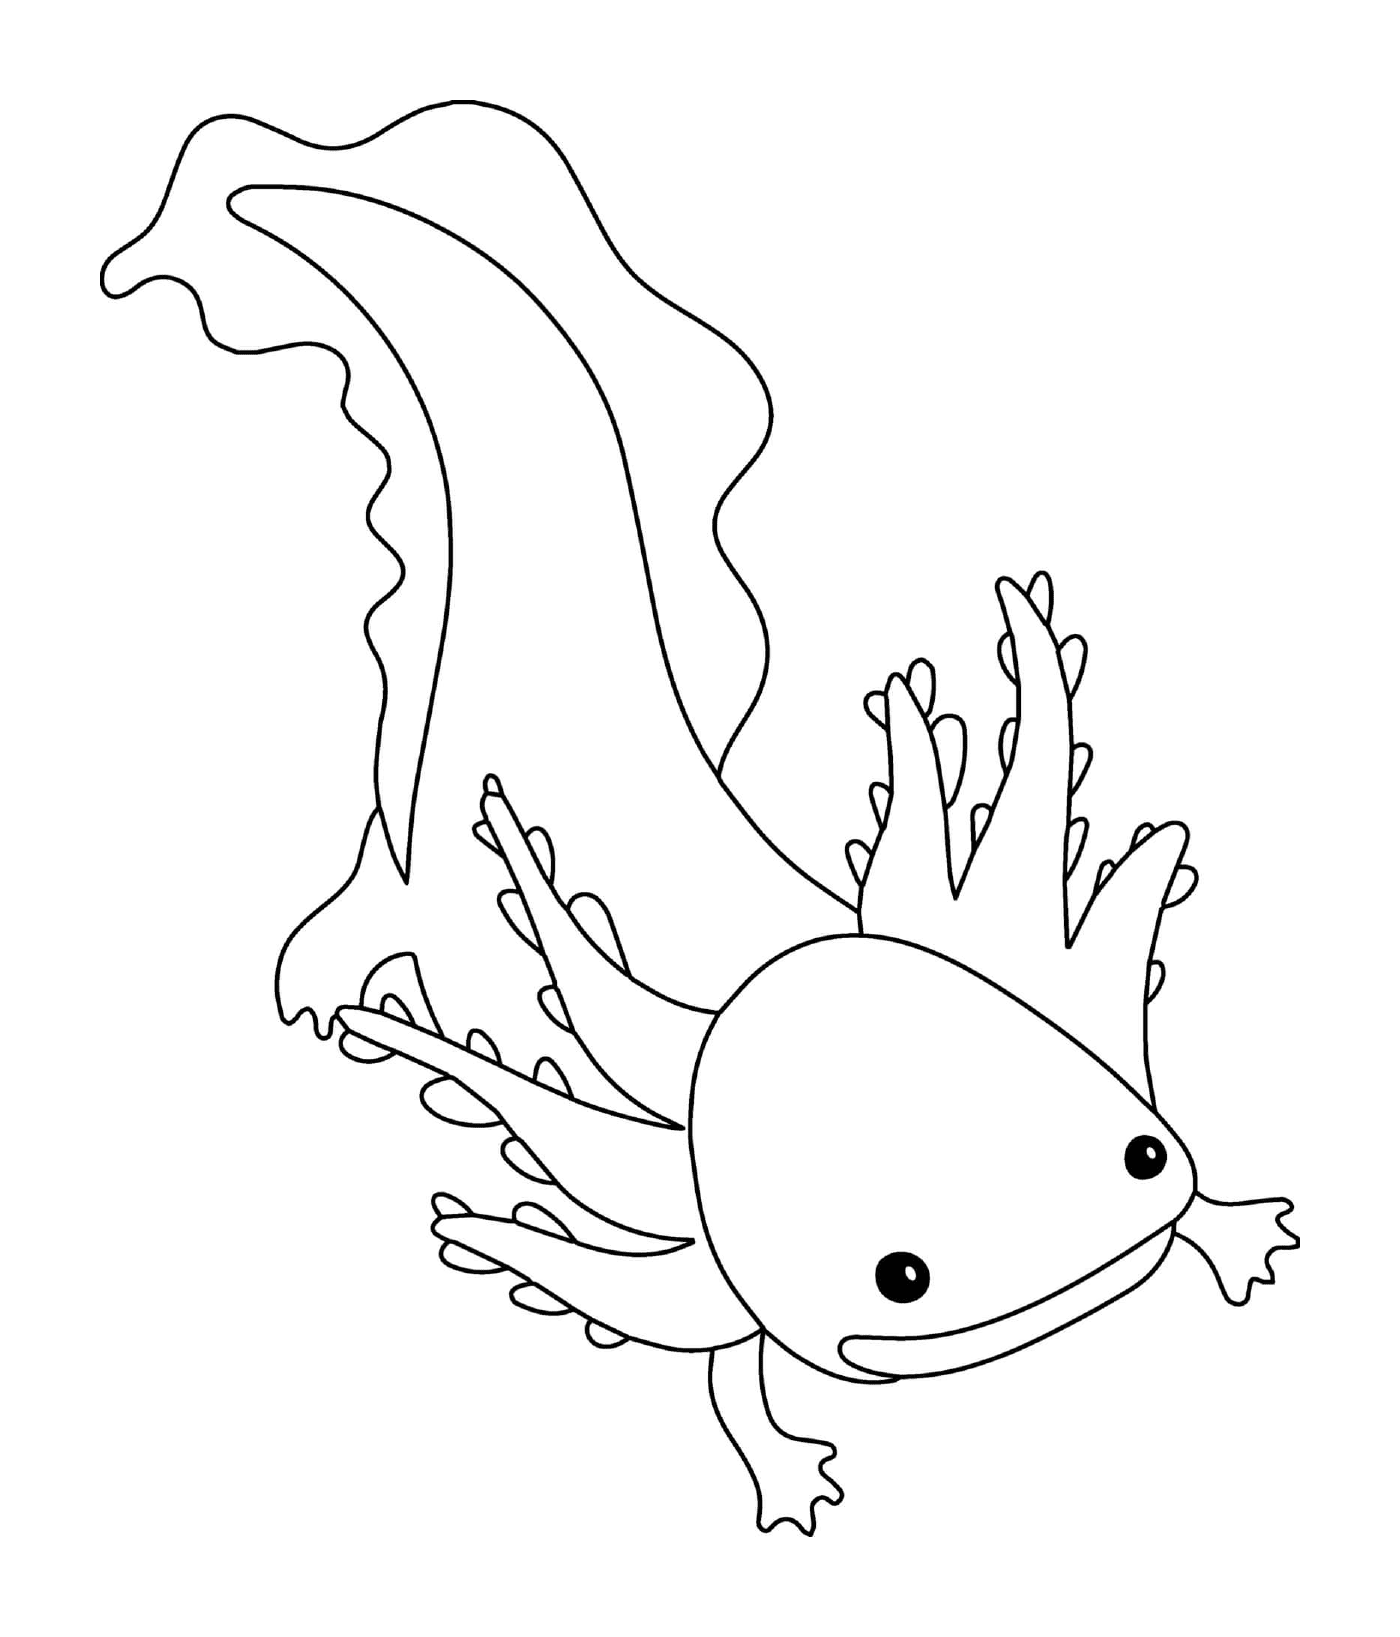  Axolotl nunca metamorfoseando 